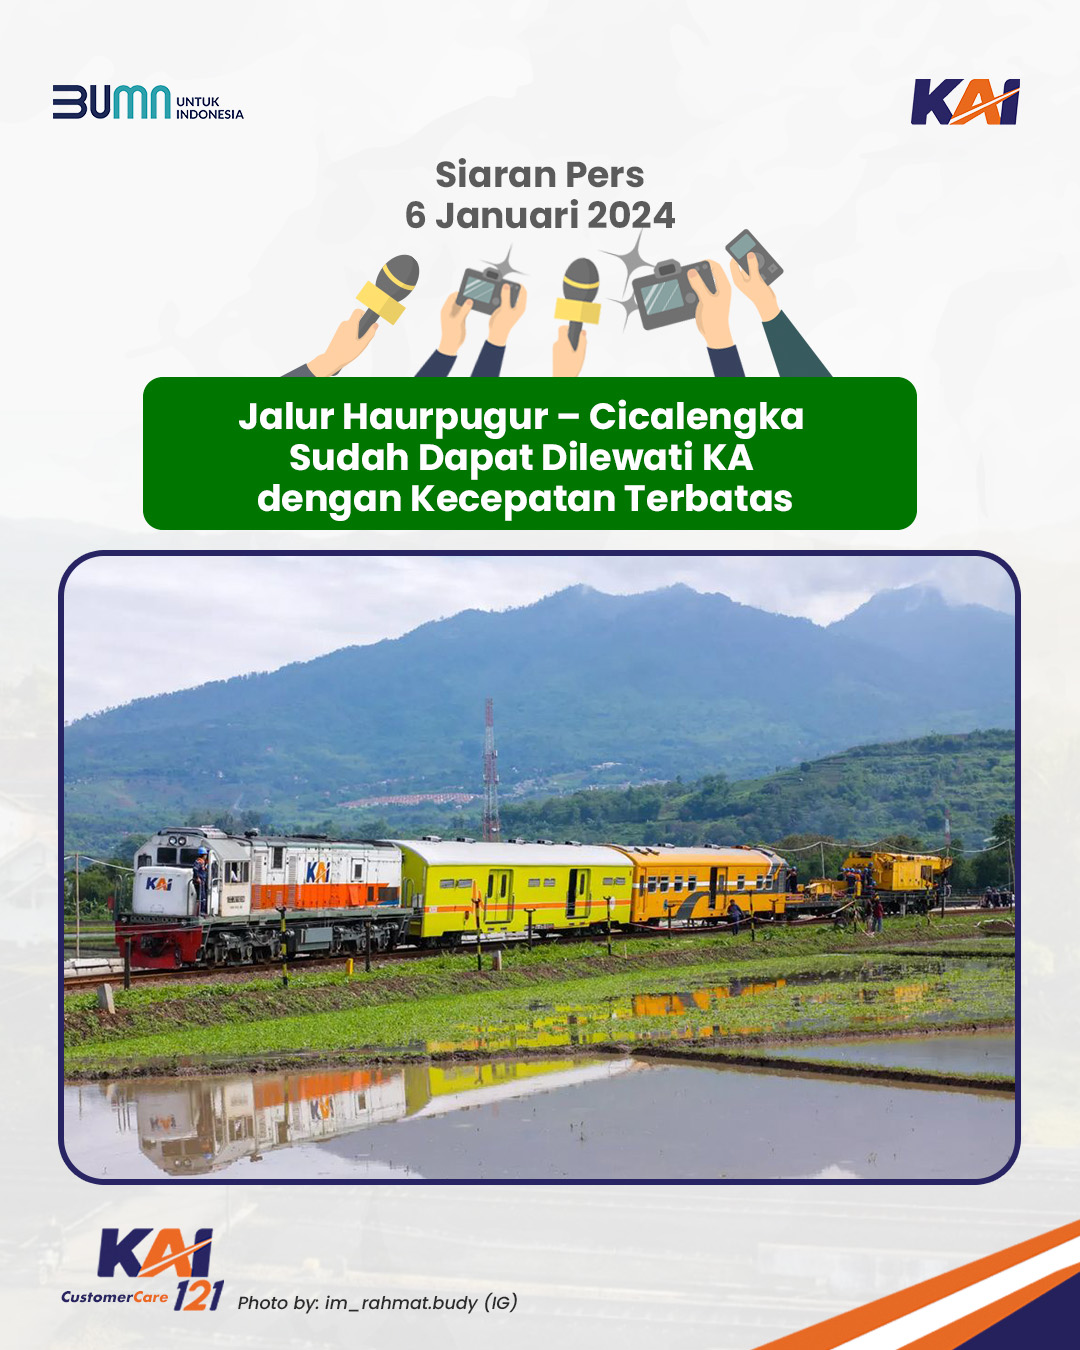 Sempat Terputus Imbas Tabrakan KA Turangga vs KA comutter Line, Jalur Haurpugur-Cicalengka Kembali Aktif